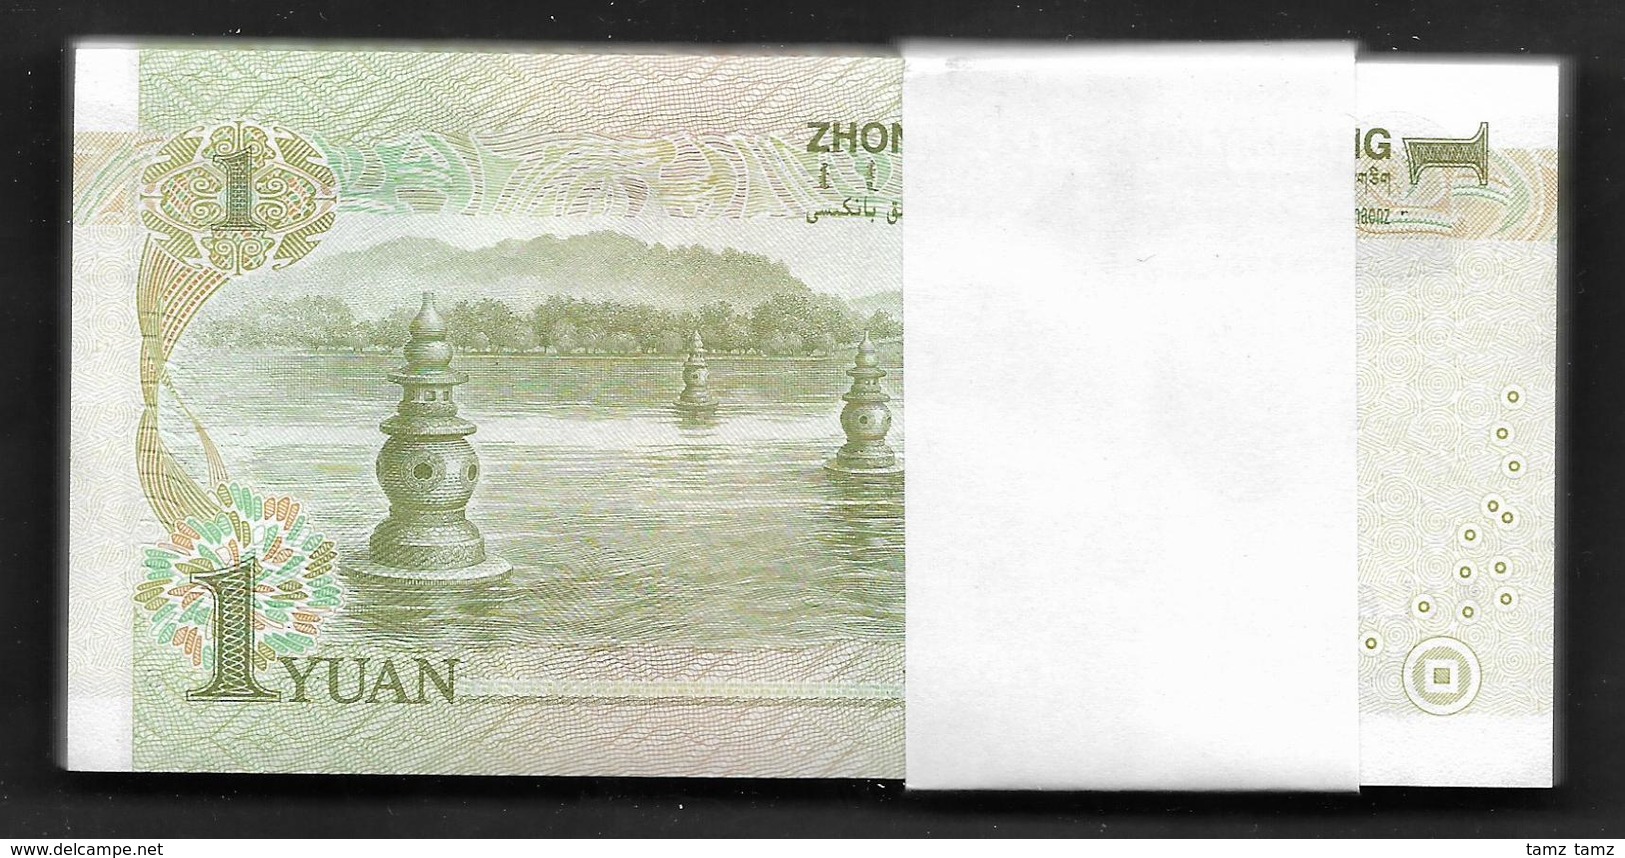 Lot 100 Pcs Consecutive 1 Bundle China 1 Yuan 1999 UNC - Indonesia